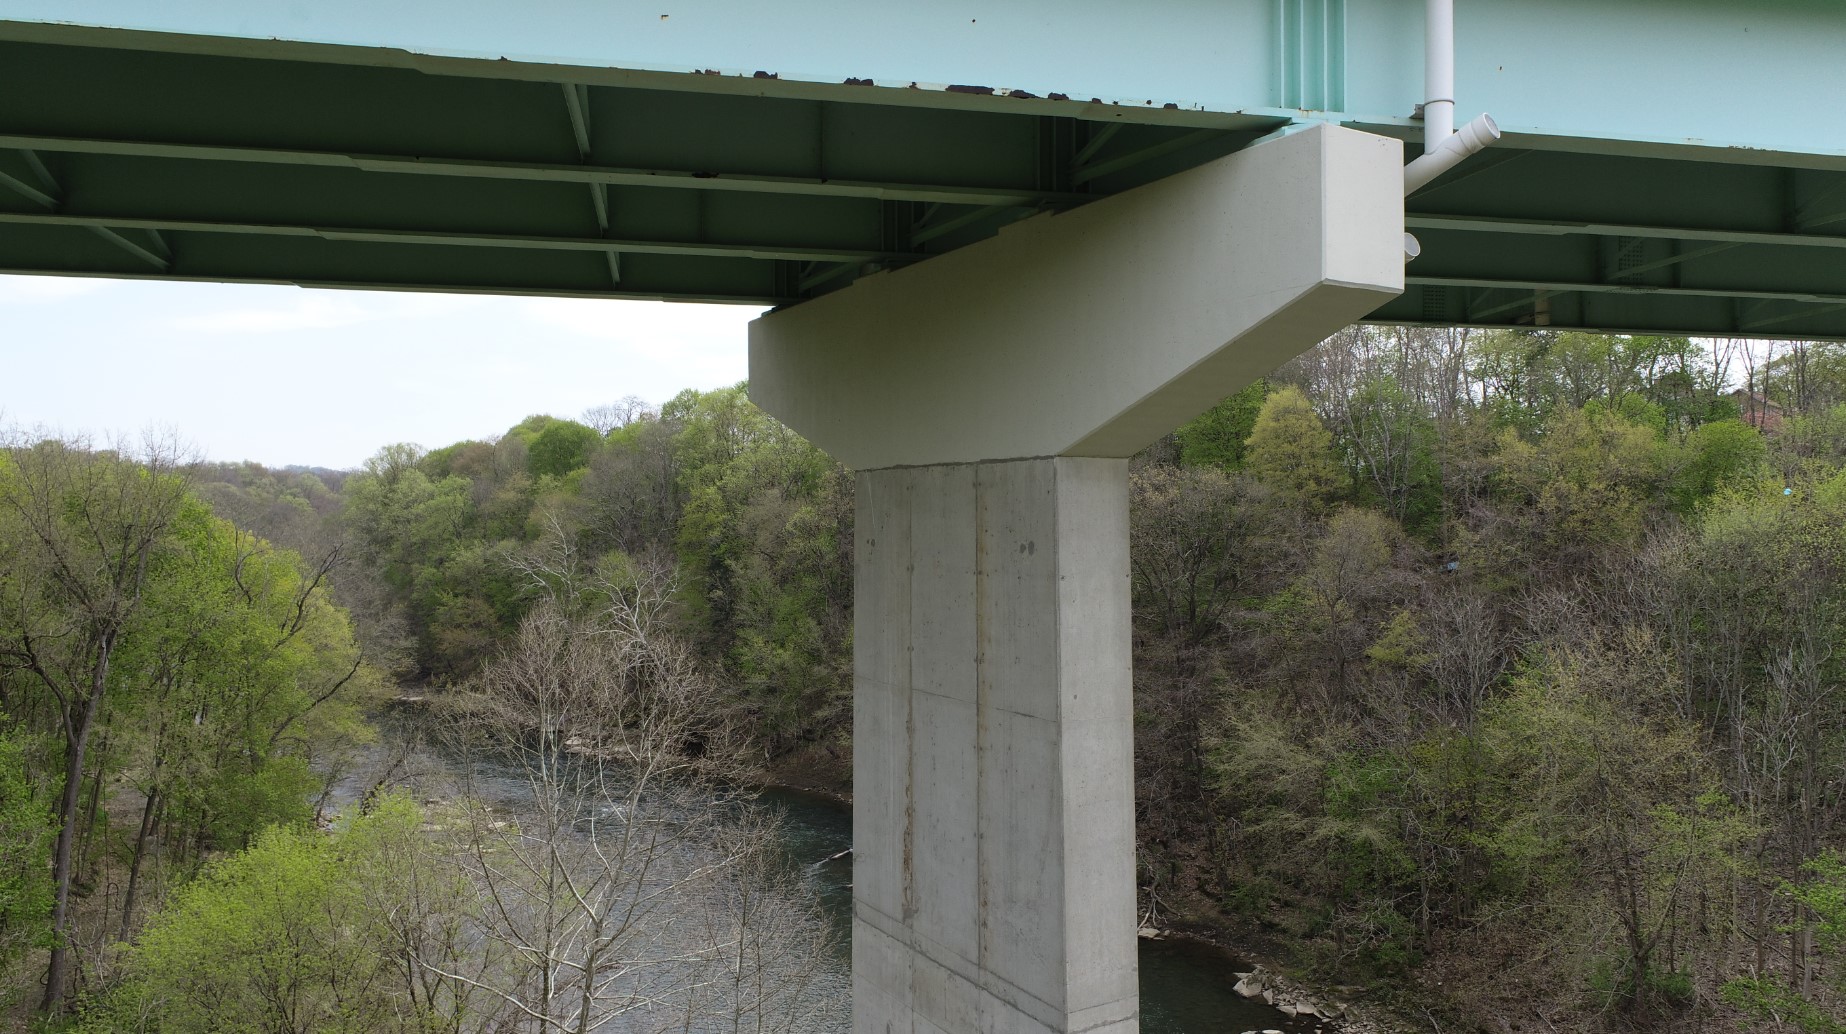 Ellwood City bridge inspection using drone footage